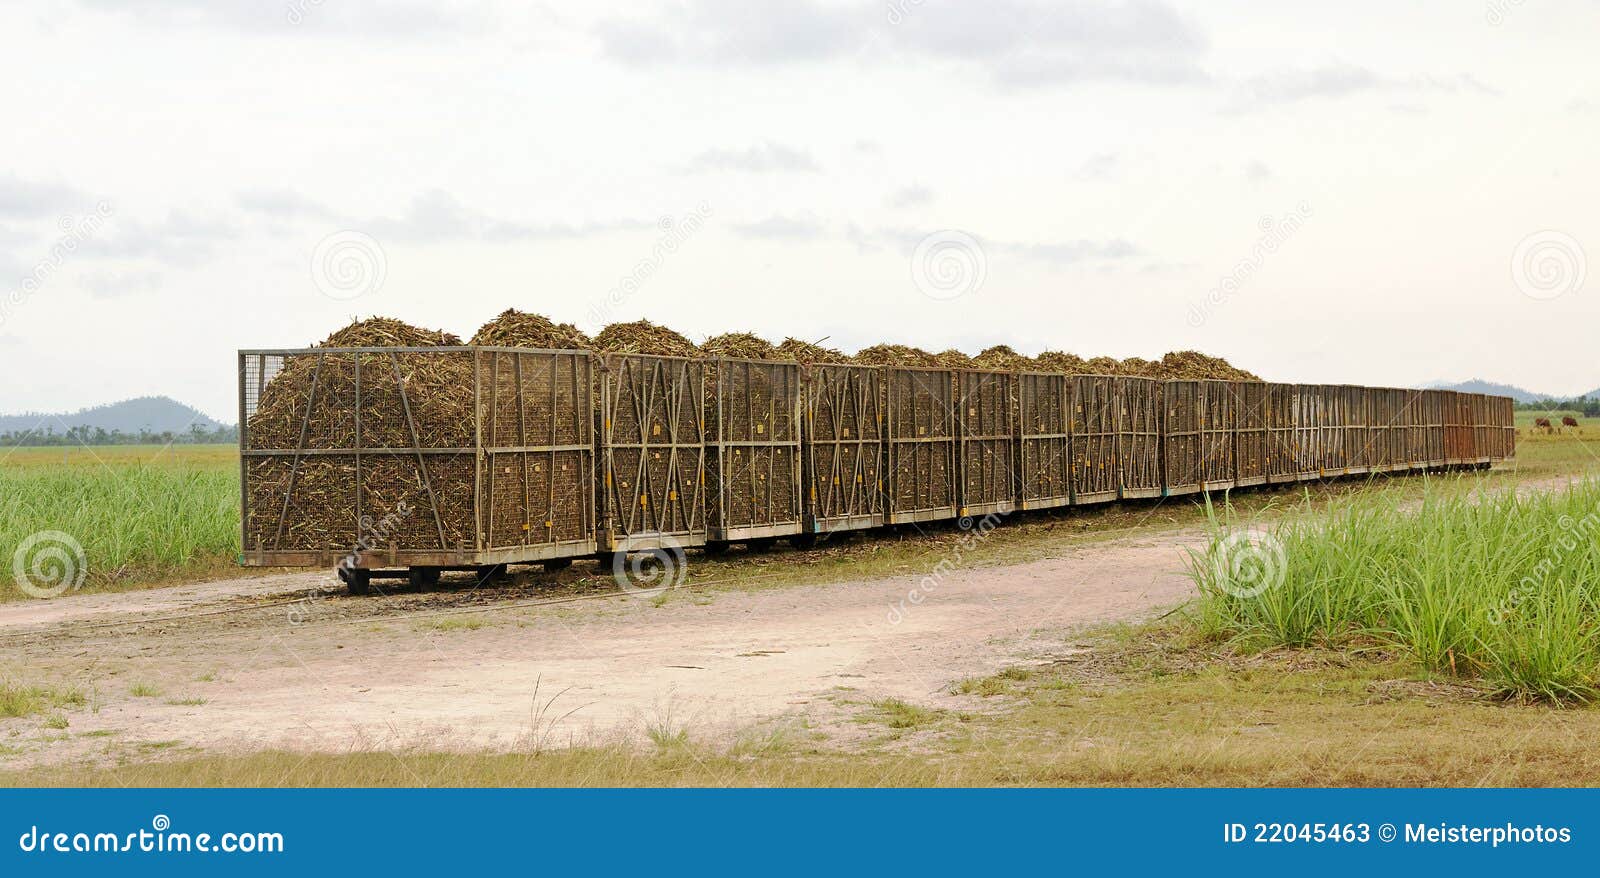 rail bins full of fresh cut sugarcane